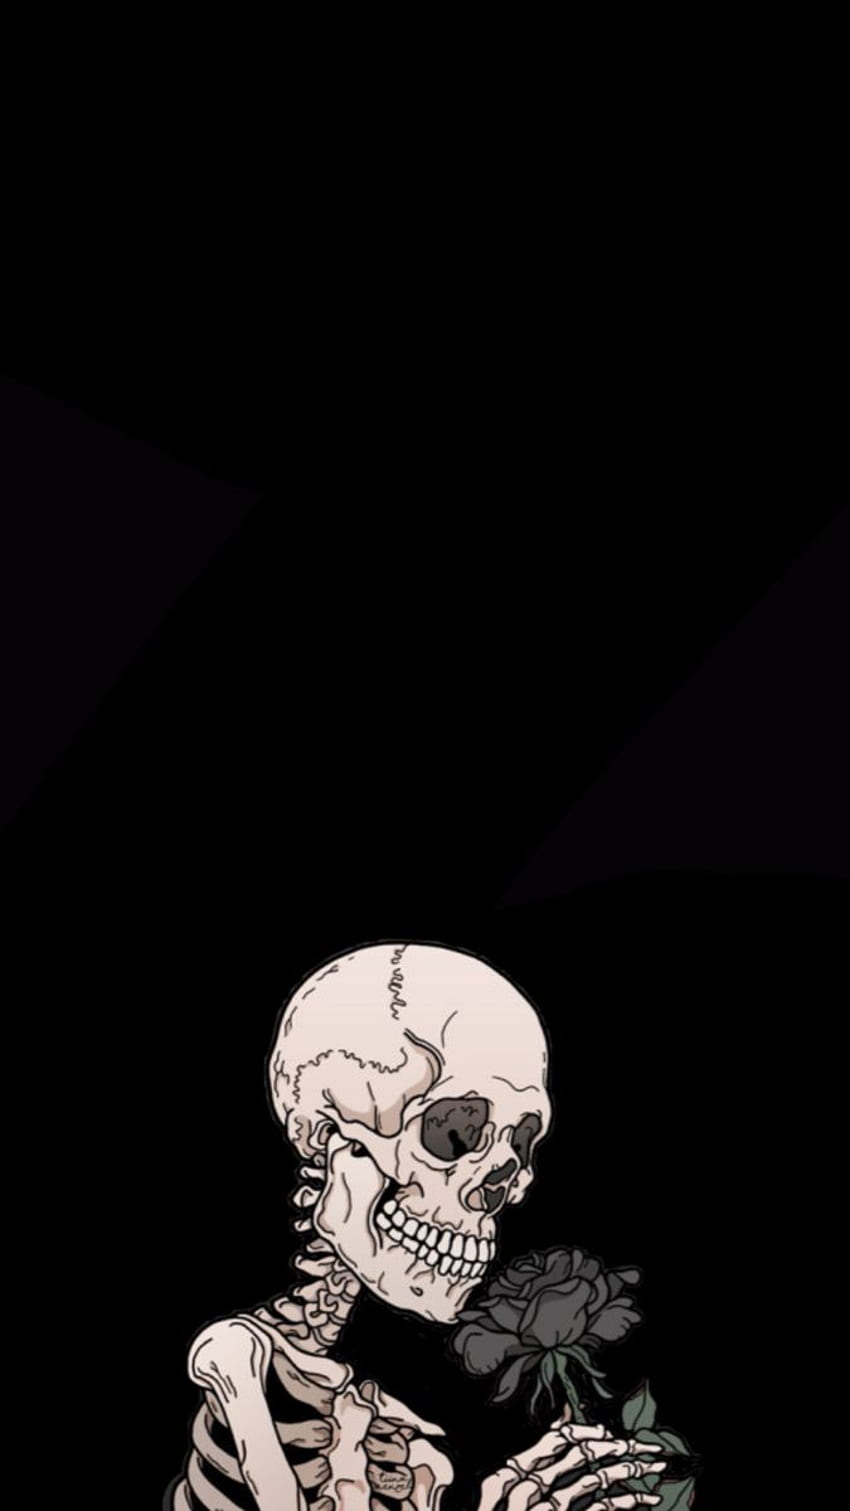 Sad skeleton wallpaper by Noahdeckman  Download on ZEDGE  5cac